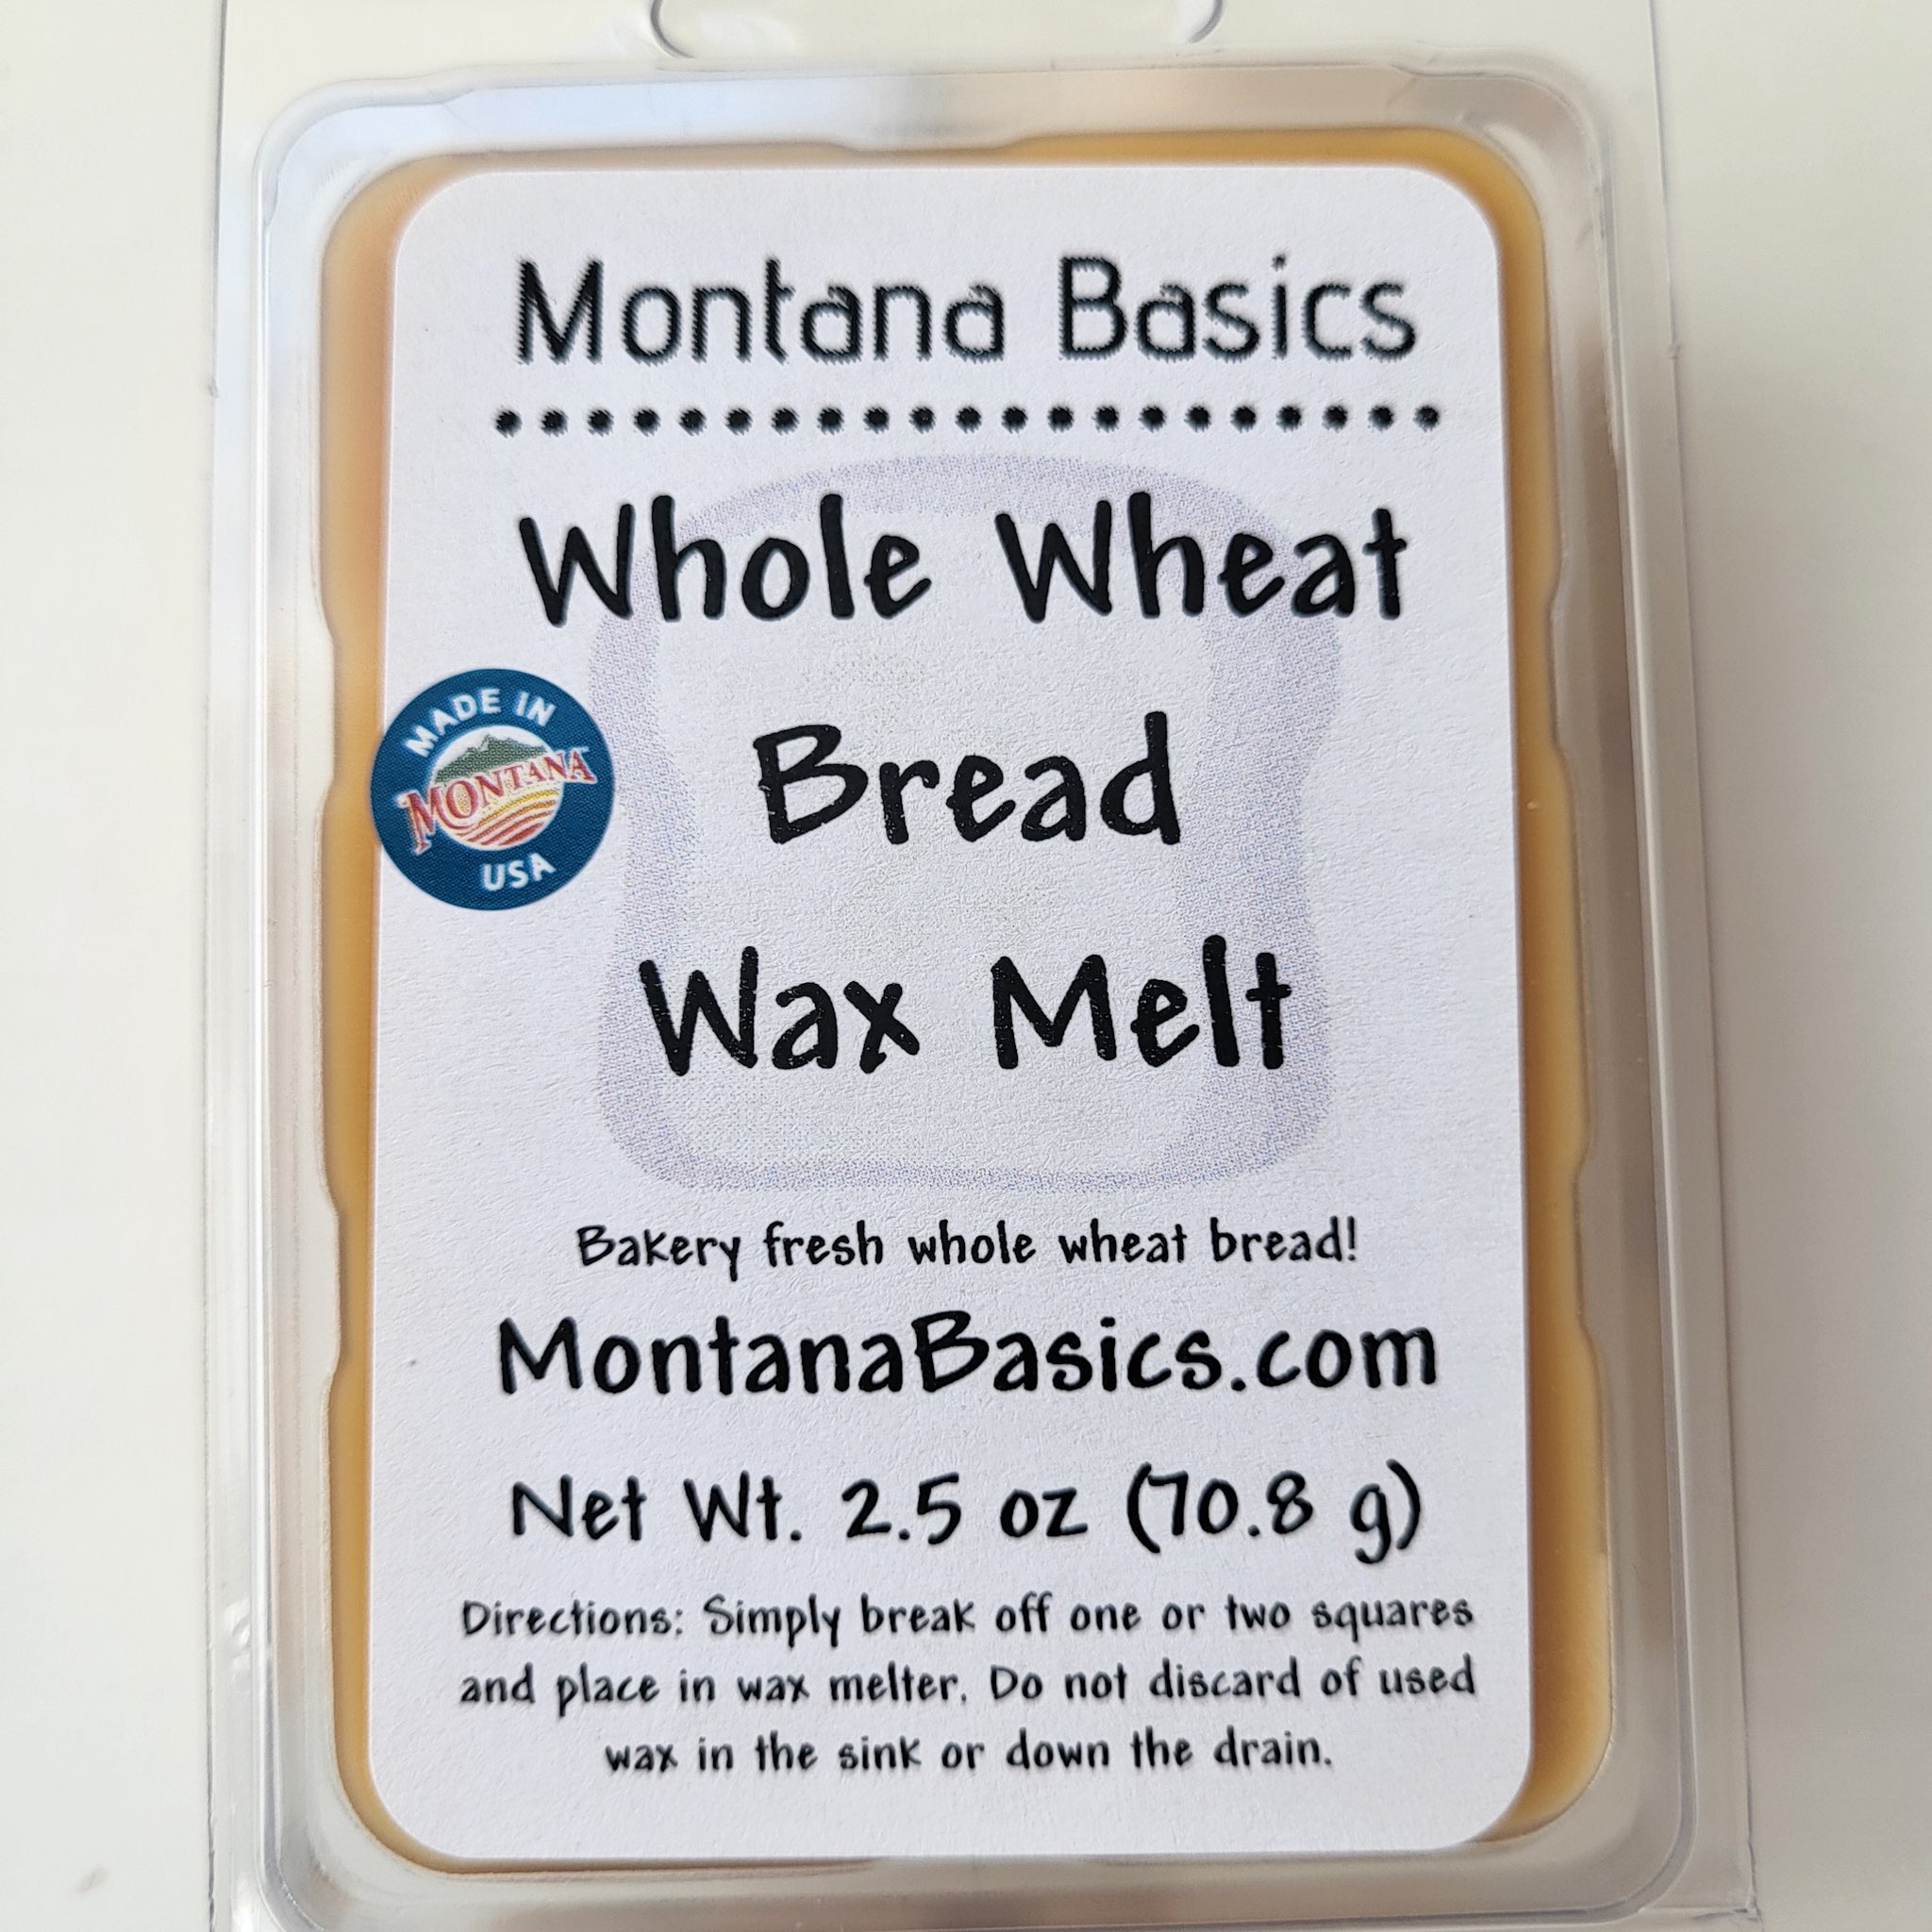 Whole Wheat Bread - Soy Wax Melt